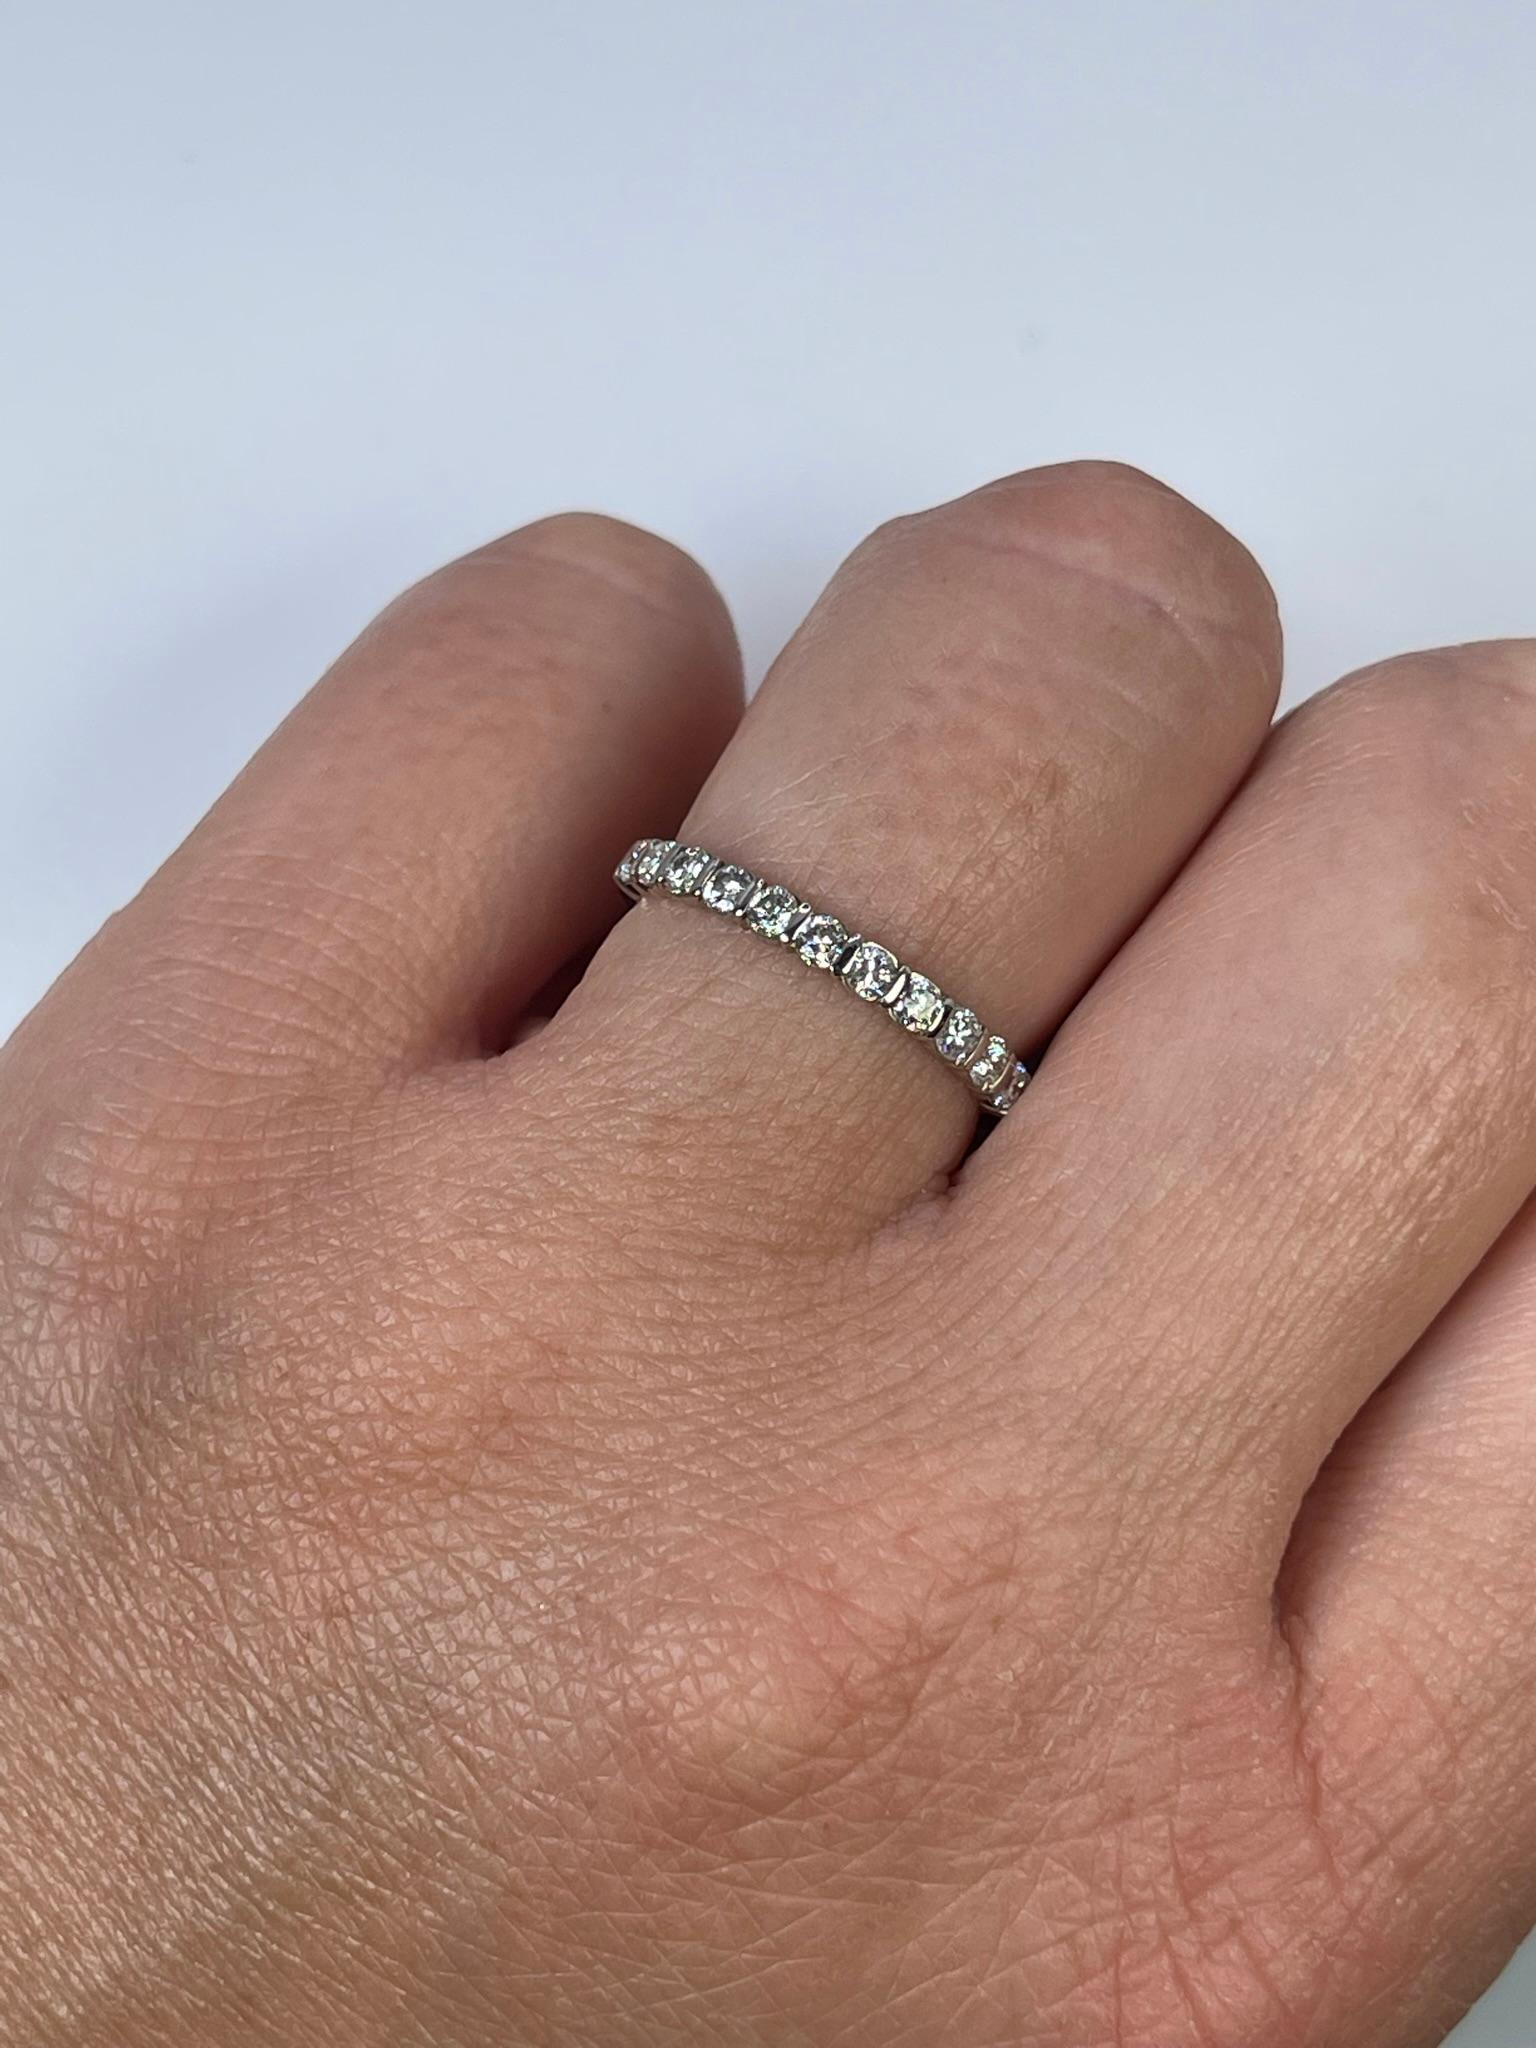 Modernist Diamond Wedding Band 14kt White Gold 0.44ct Simple Hald Way Diamond Ring For Sale